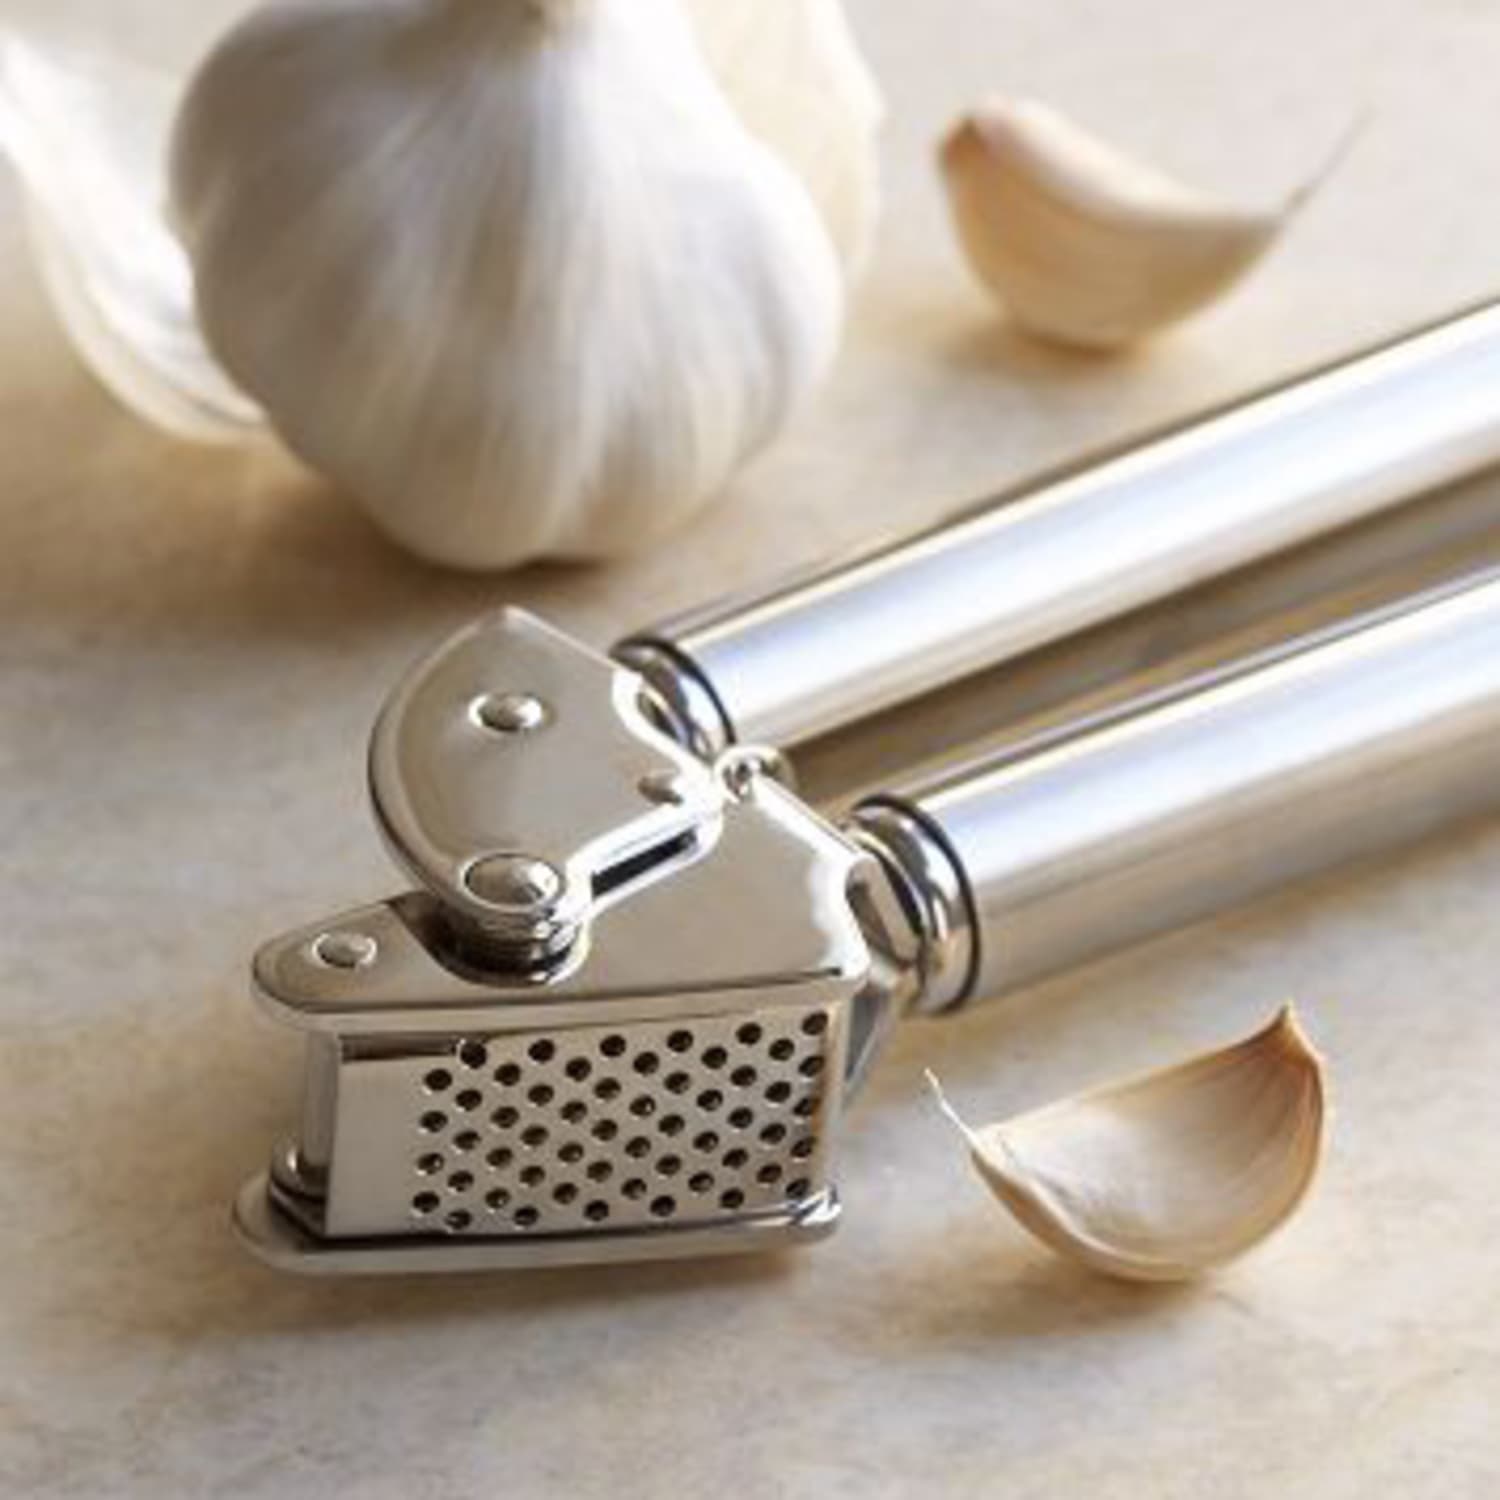 Garlic Press: Should You Buy One?